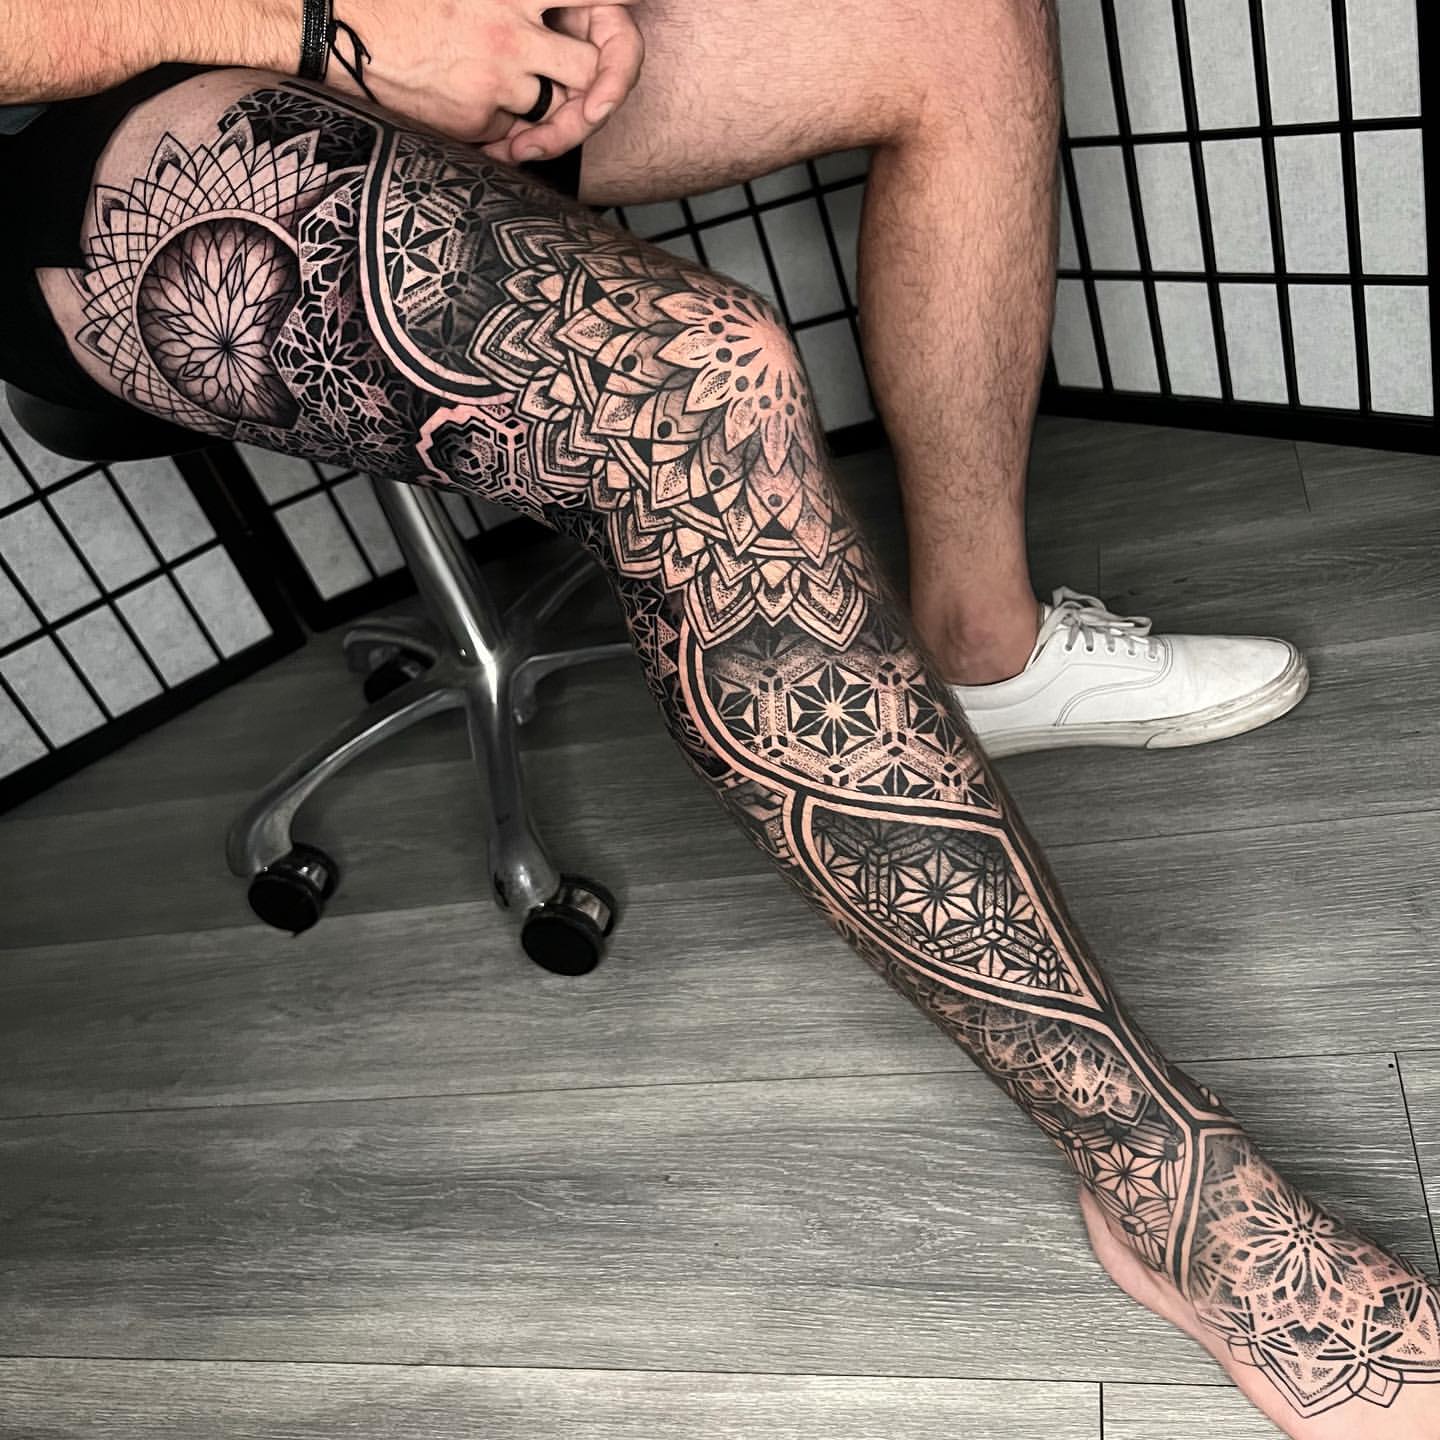 tattoo story board | Simple tattoos for guys, Small chest tattoos, Leg  tattoos small